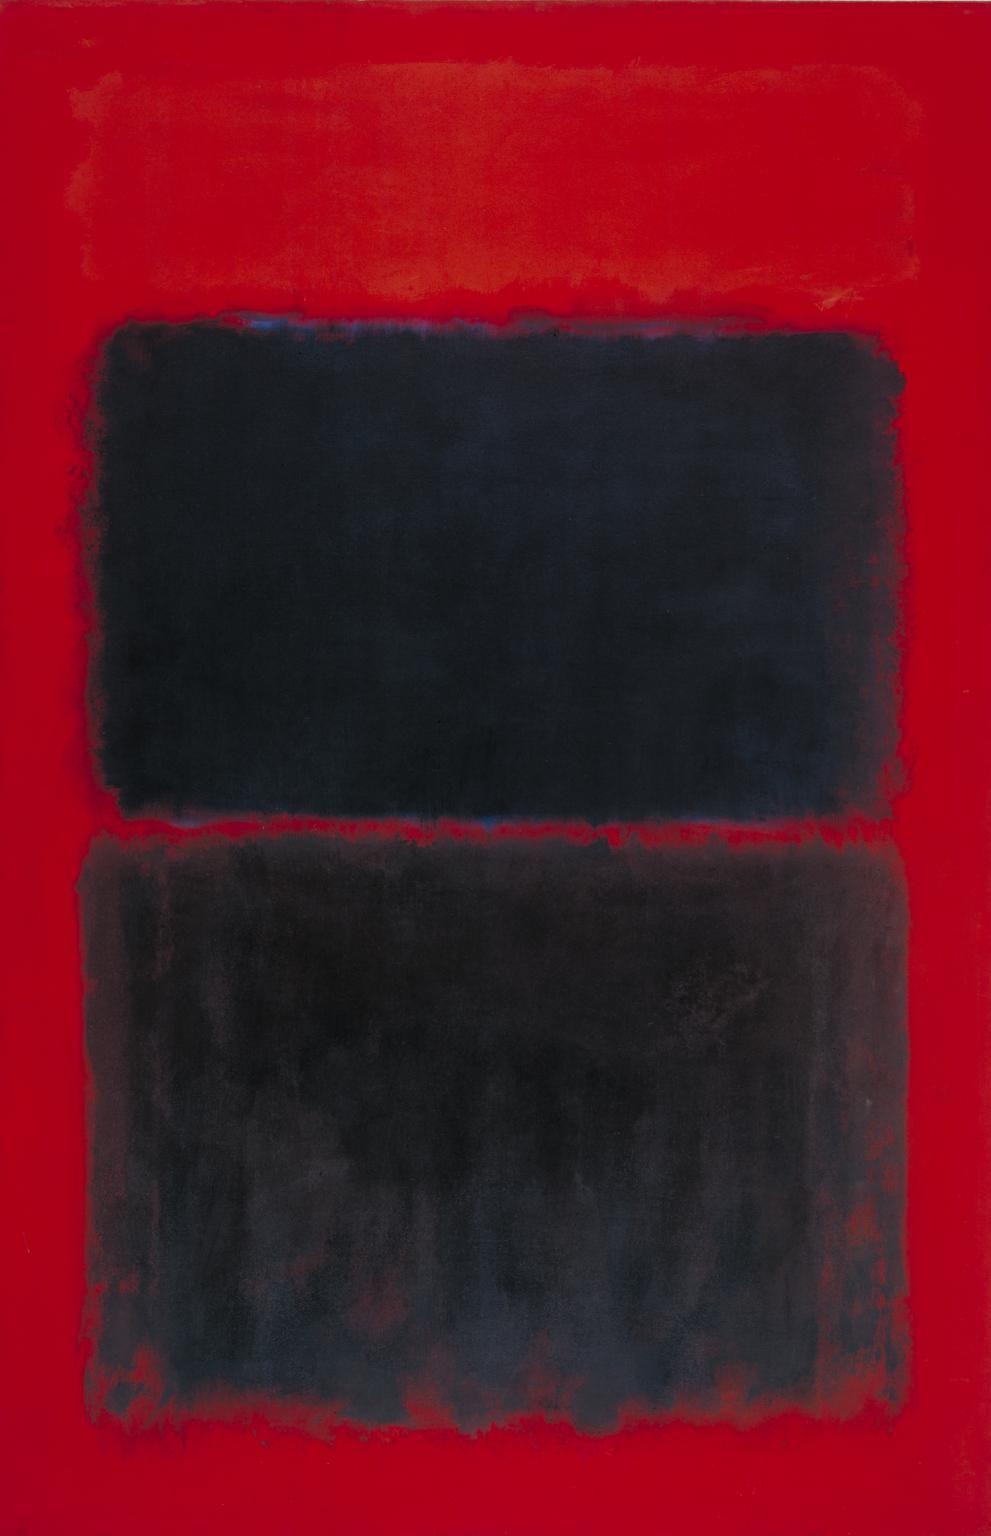 Black and Red Rectangle Logo - Light Red Over Black', Mark Rothko, 1957 | Tate